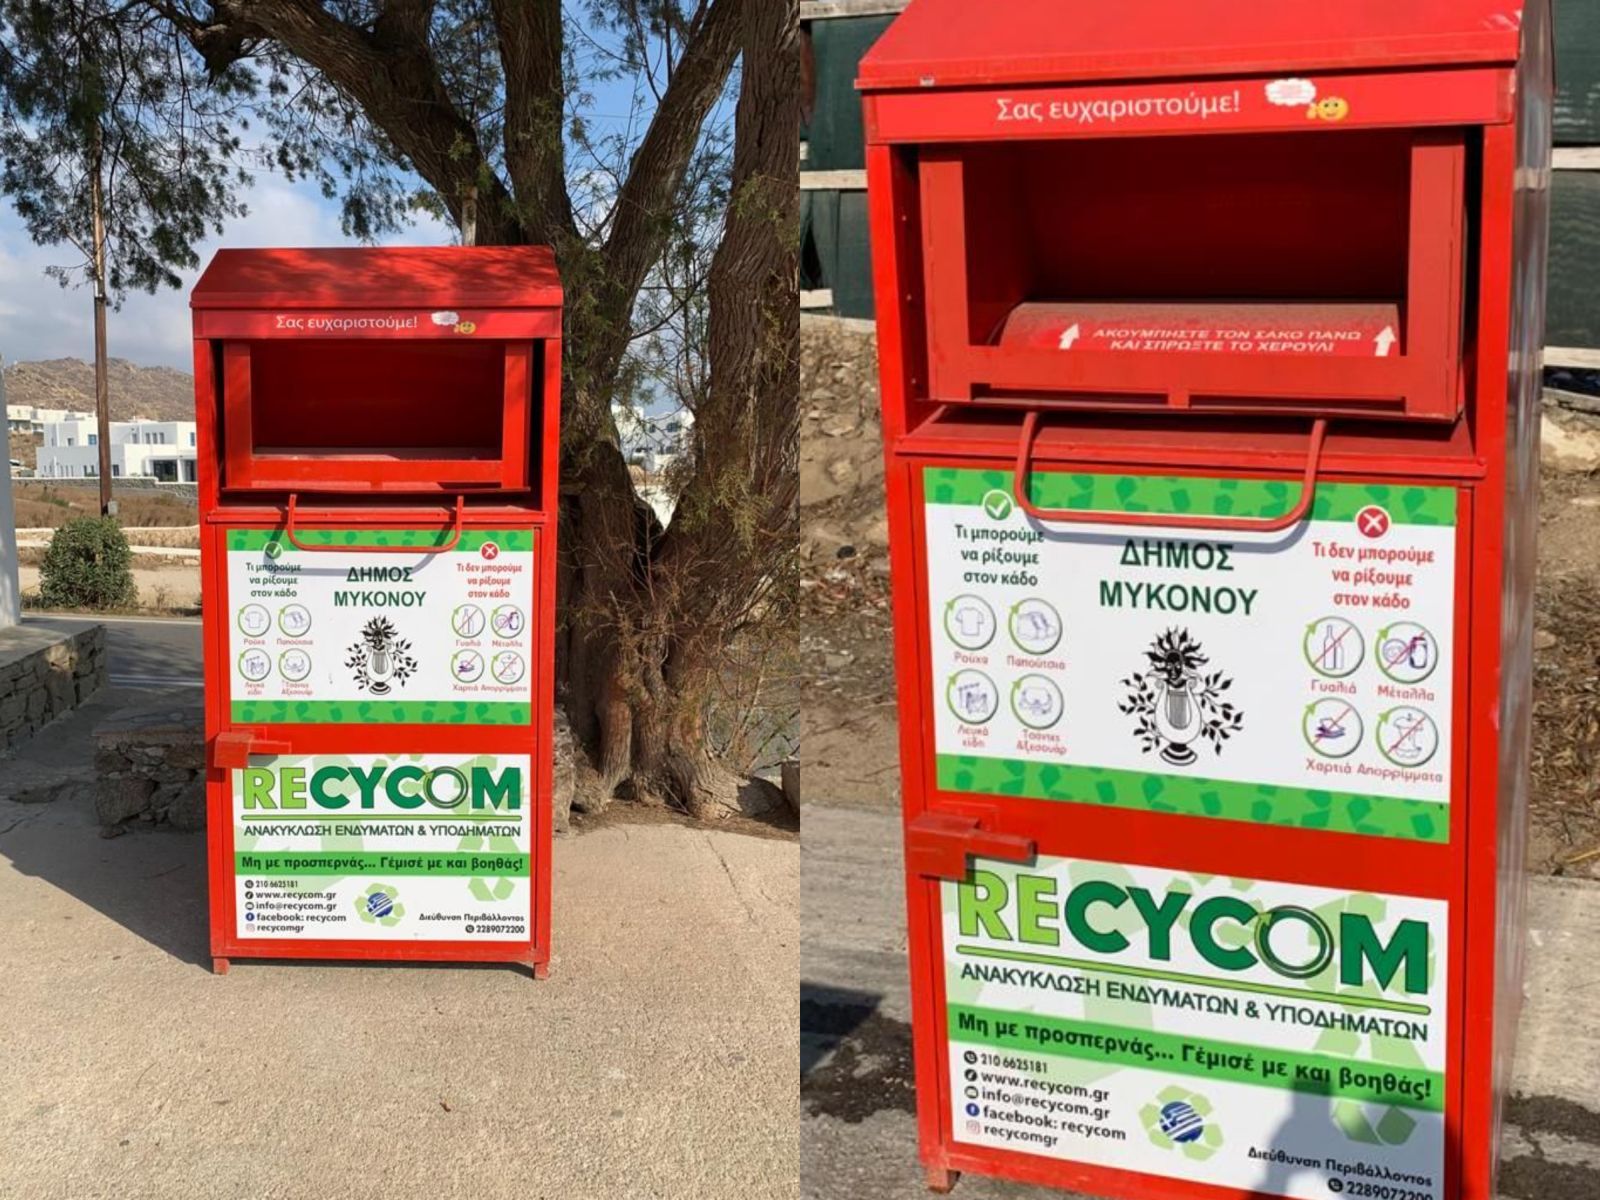 O Δήμος Μυκόνου και η εταιρεία Recycom τοποθέτησαν δύο κόκκινους κάδους ανακύκλωσης ρούχων, υποδημάτων και λευκών ειδών